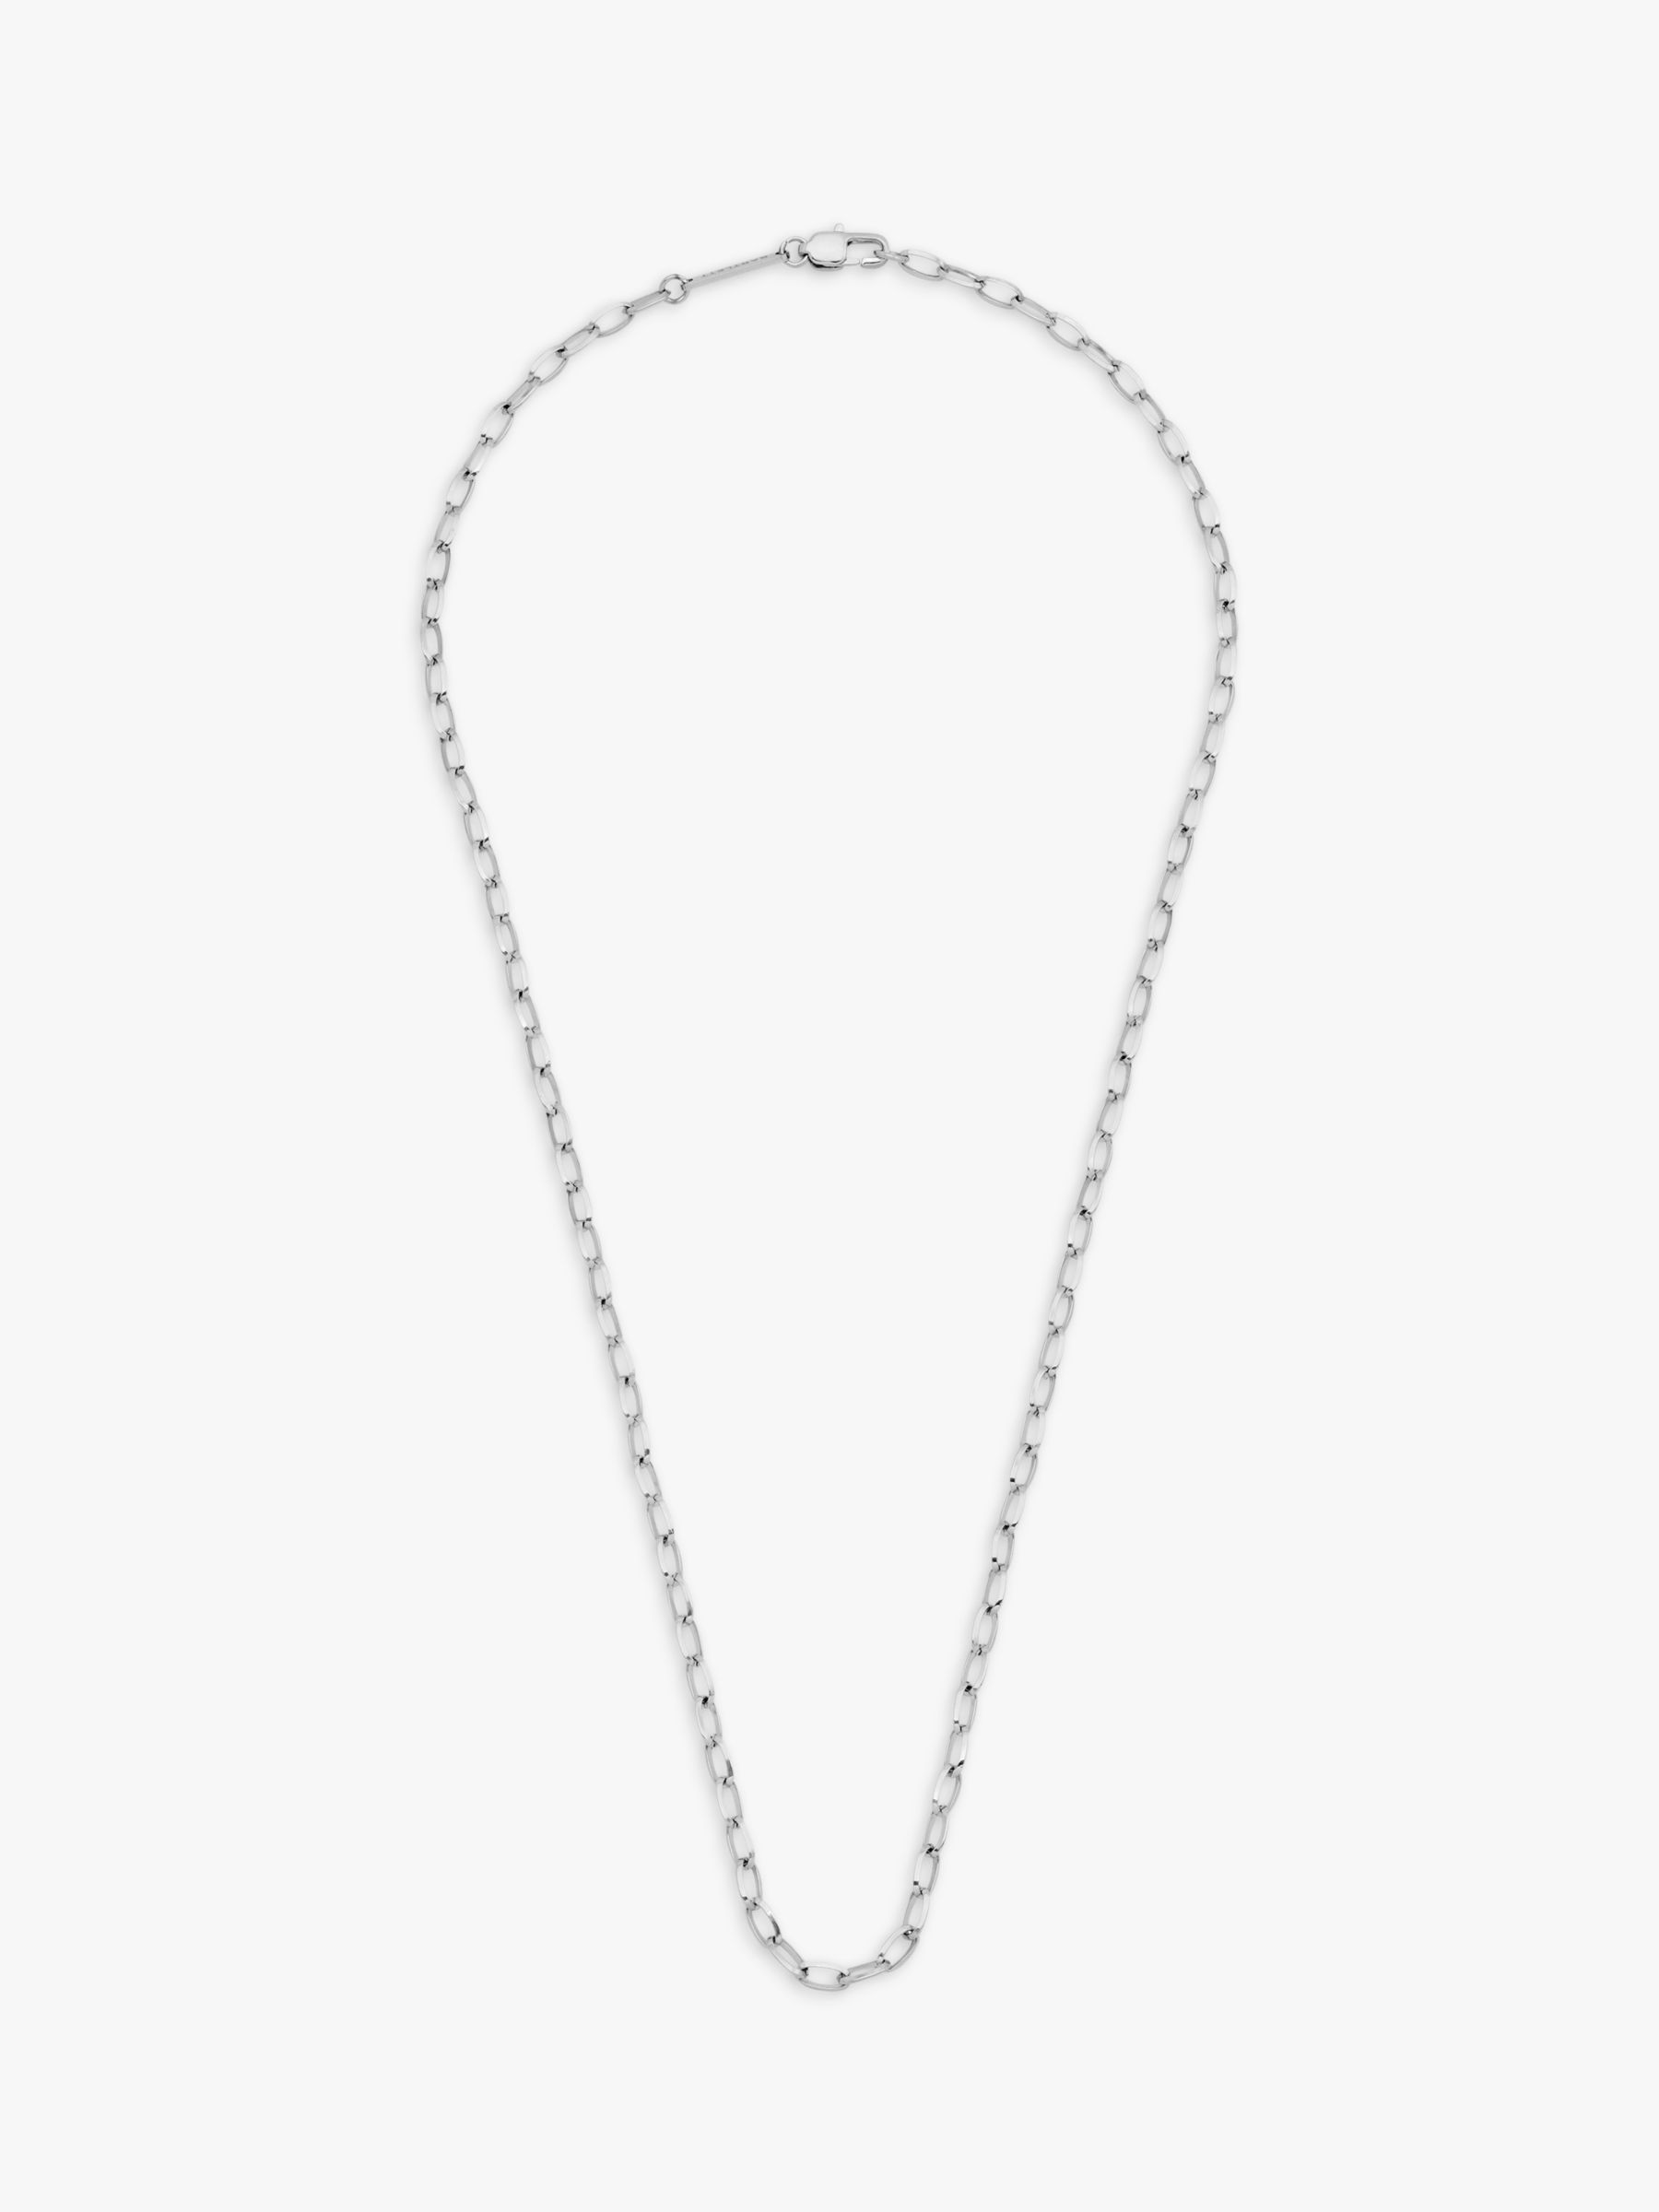 BARTLETT LONDON Men's Paperclip Chain Necklace, Silver